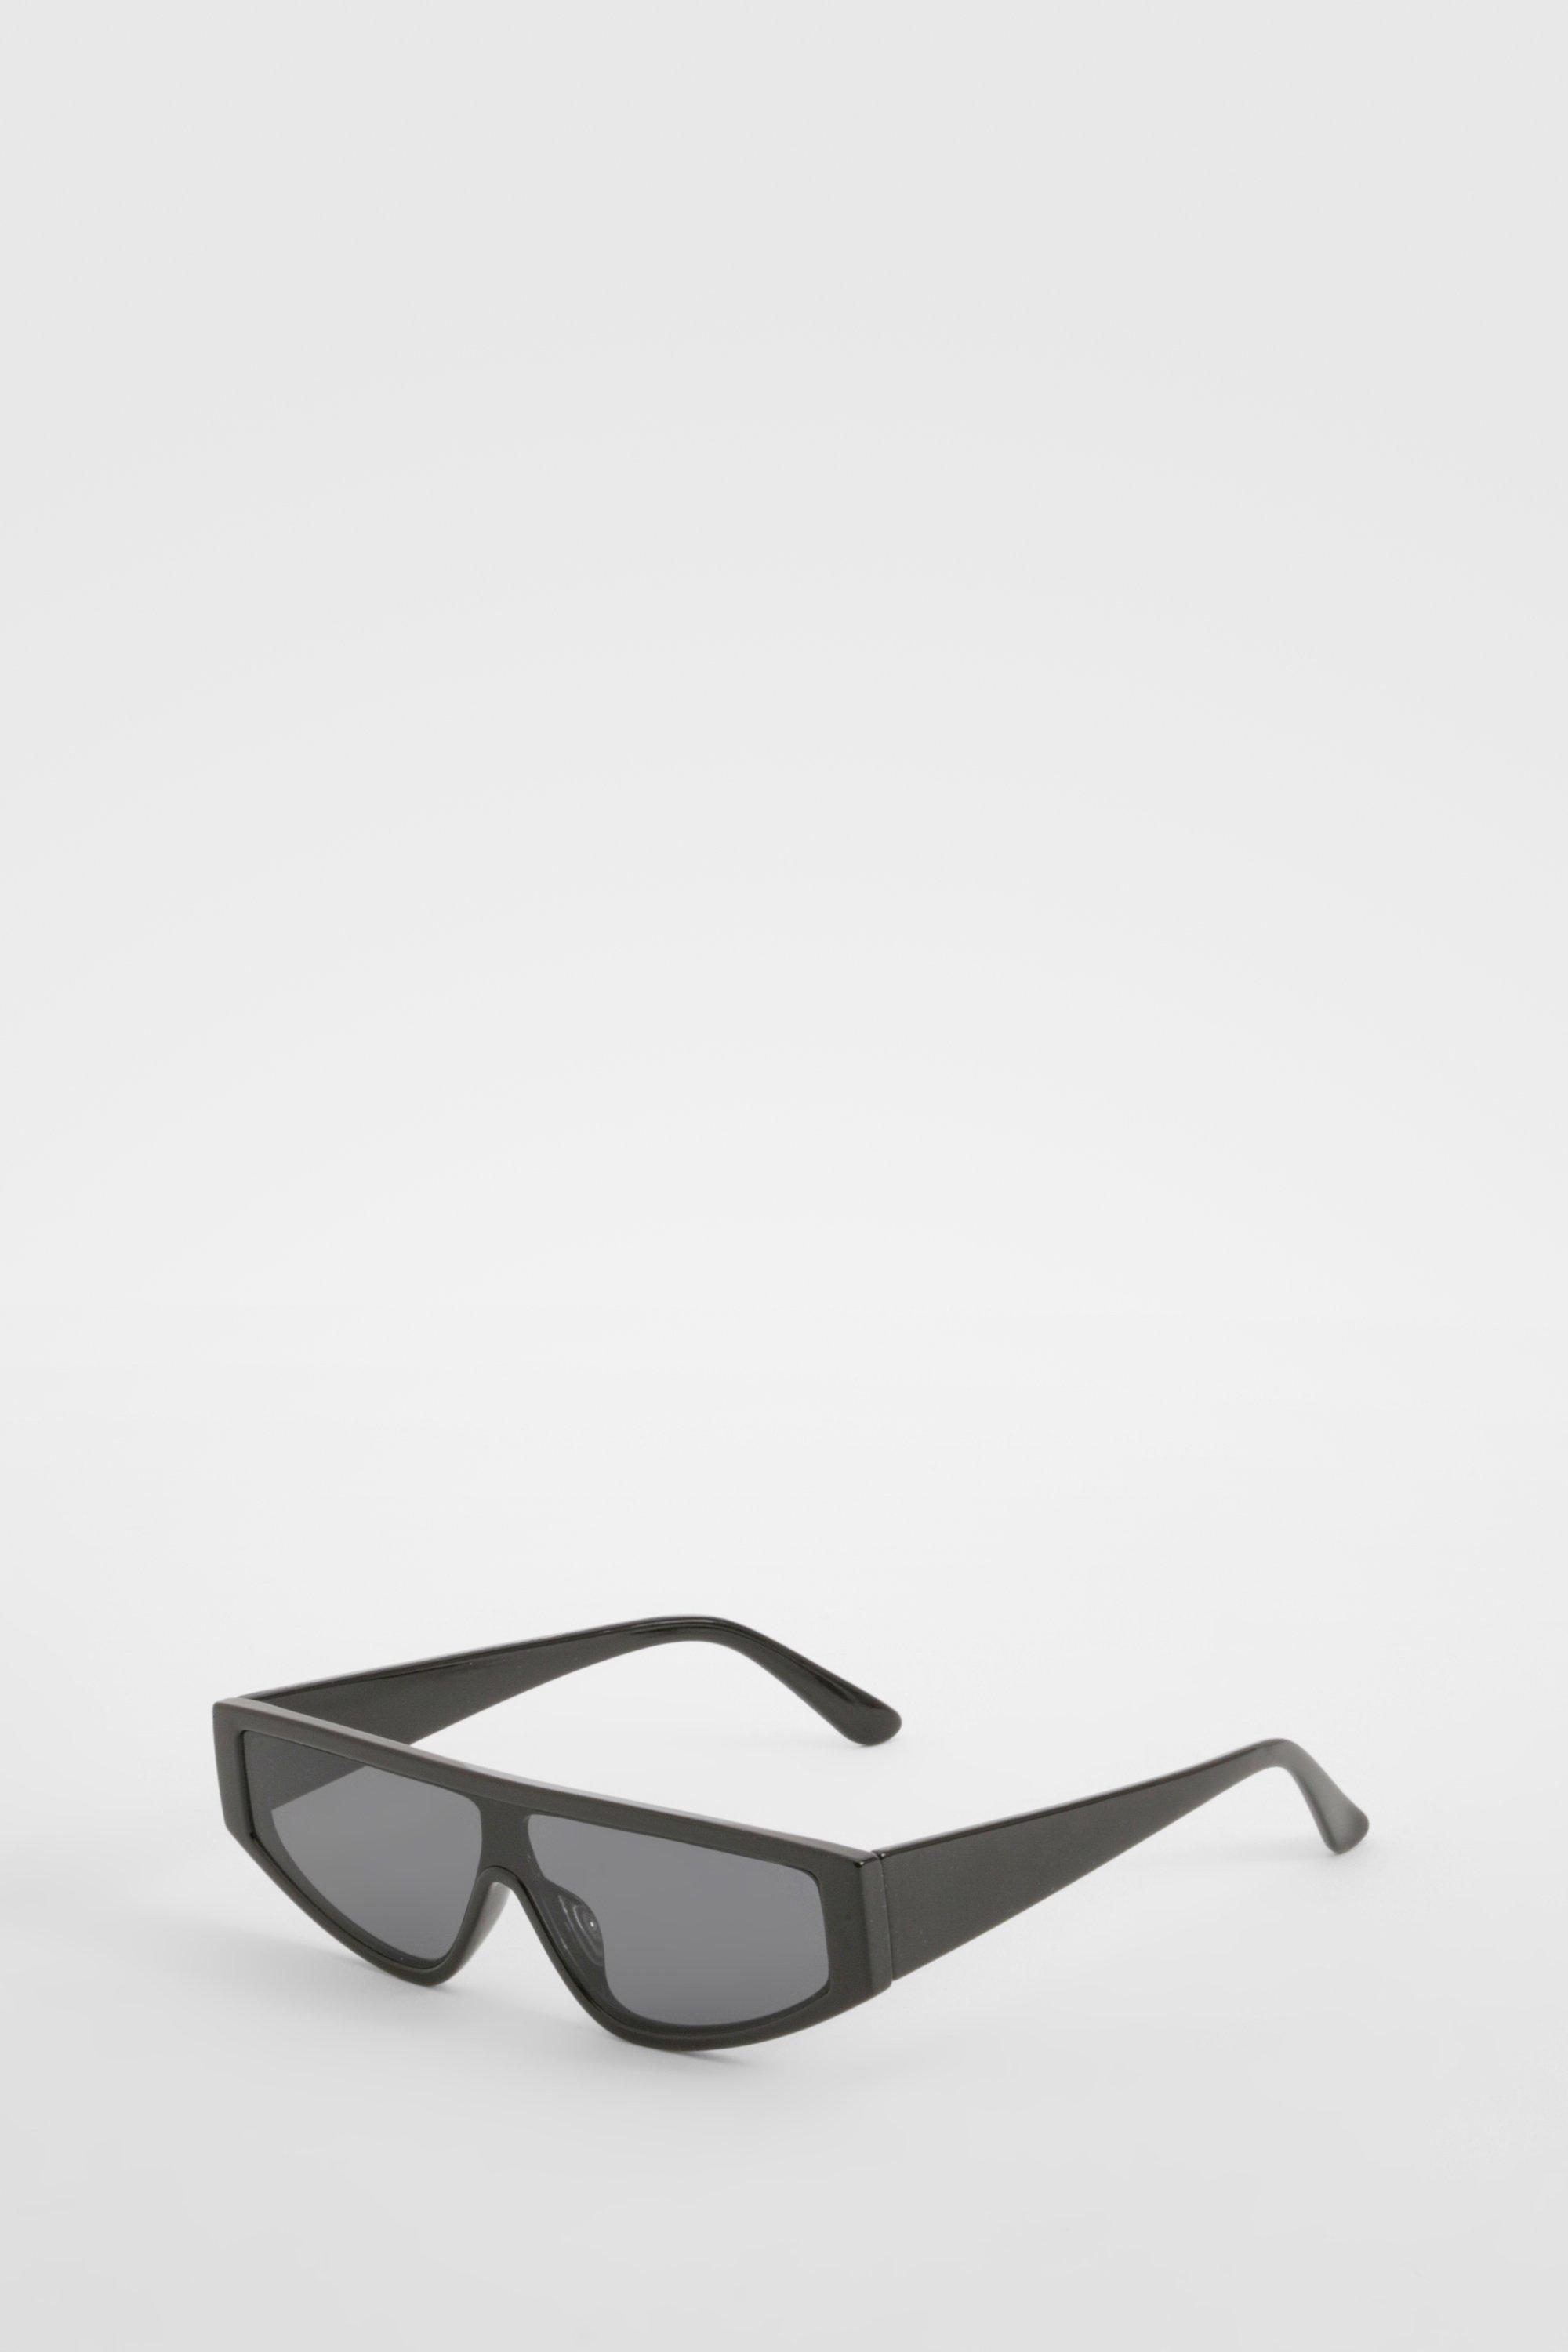 Image of Black Angled Sunglasses, Nero